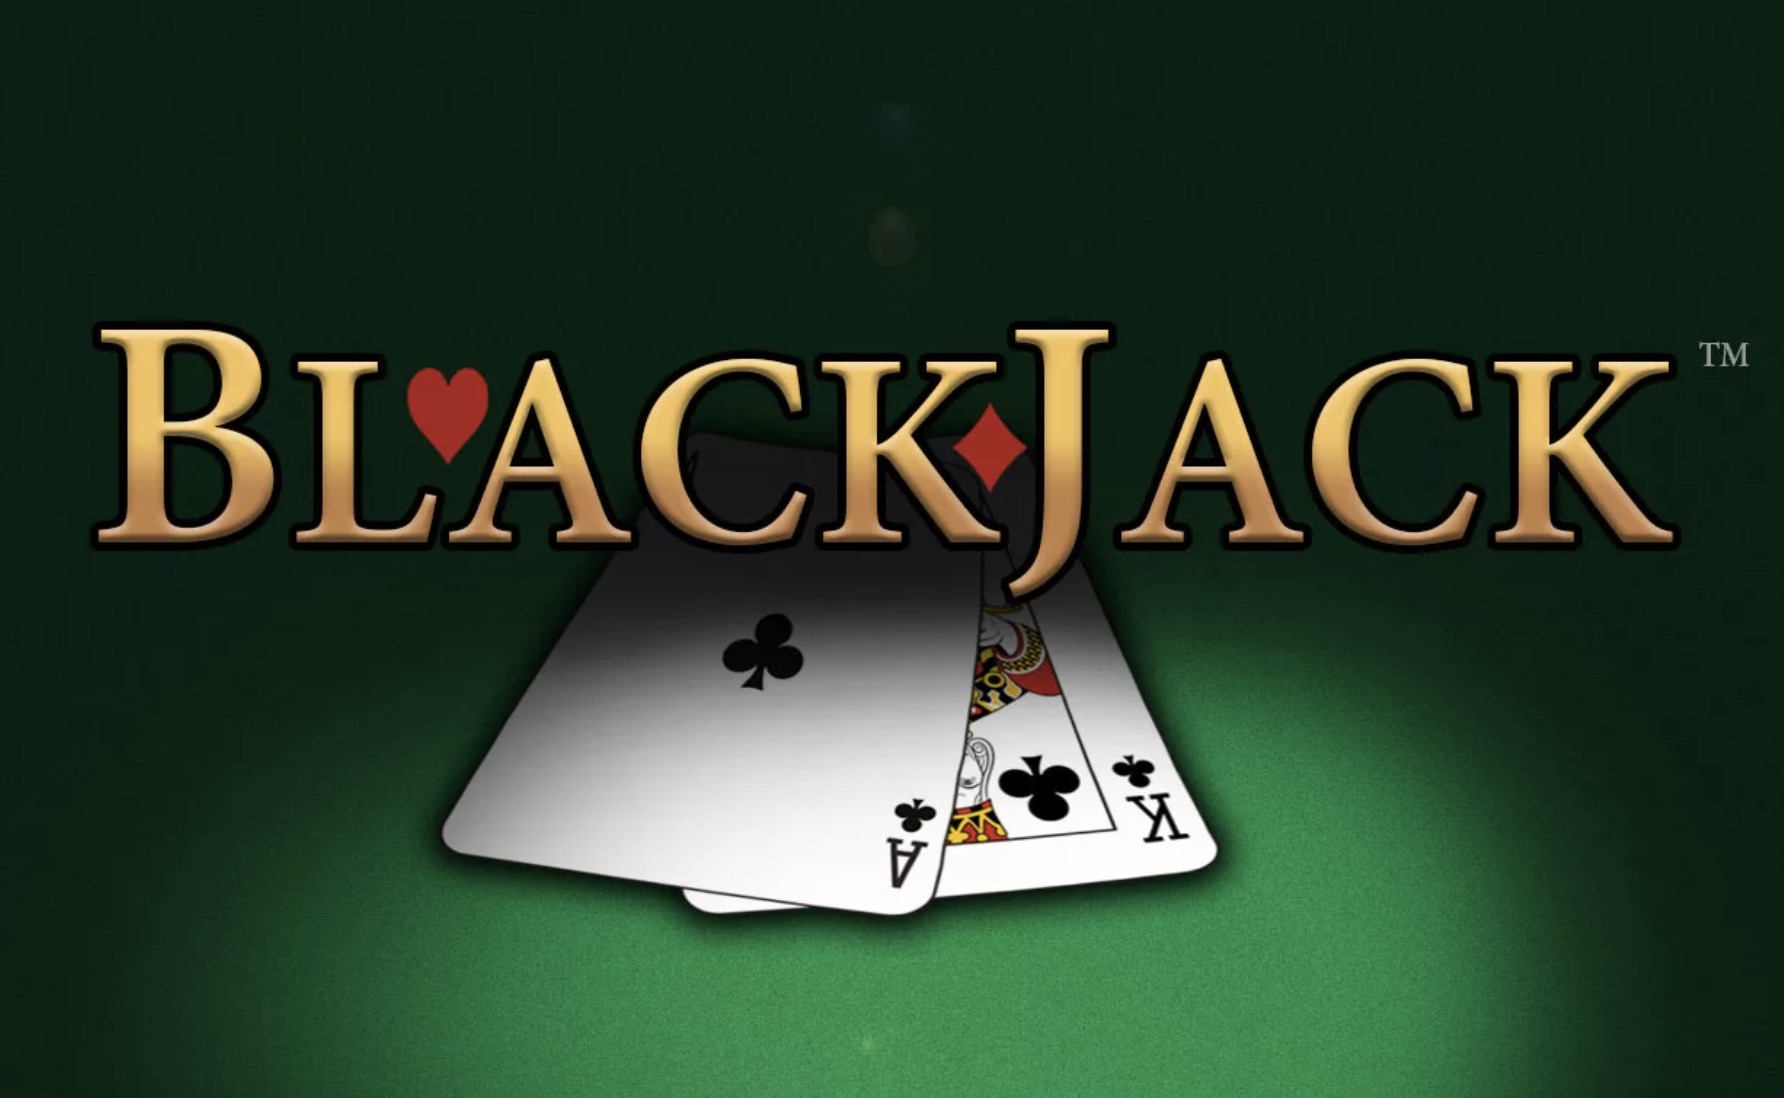 Basic Blackjack strategy